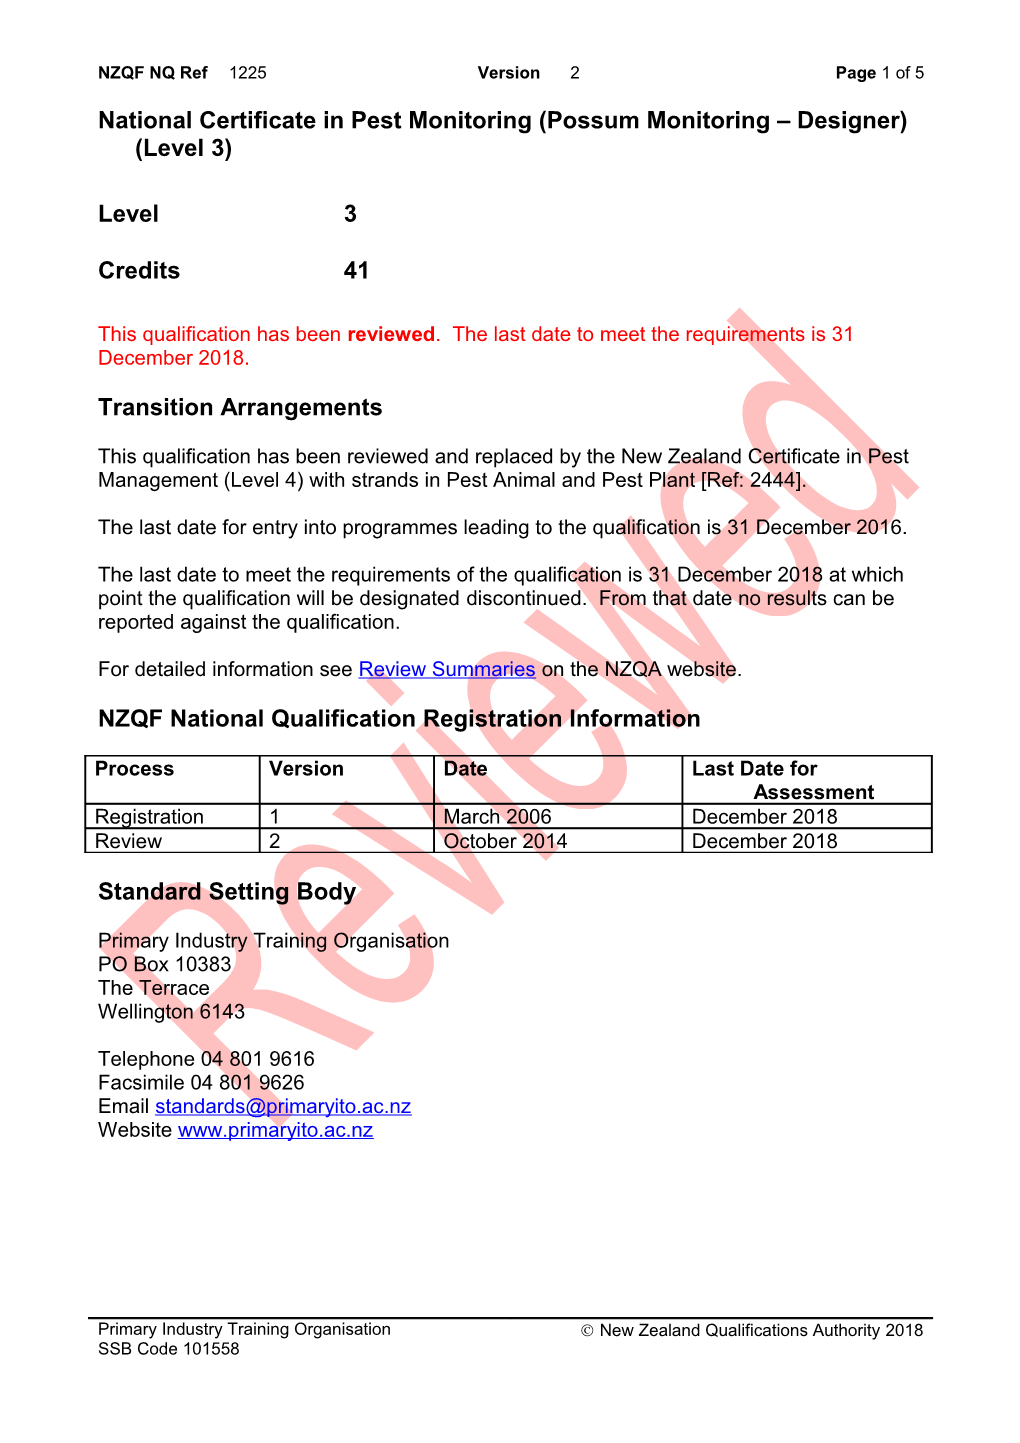 1225 National Certificate in Pest Monitoring (Possum Monitoring Designer) (Level 3)